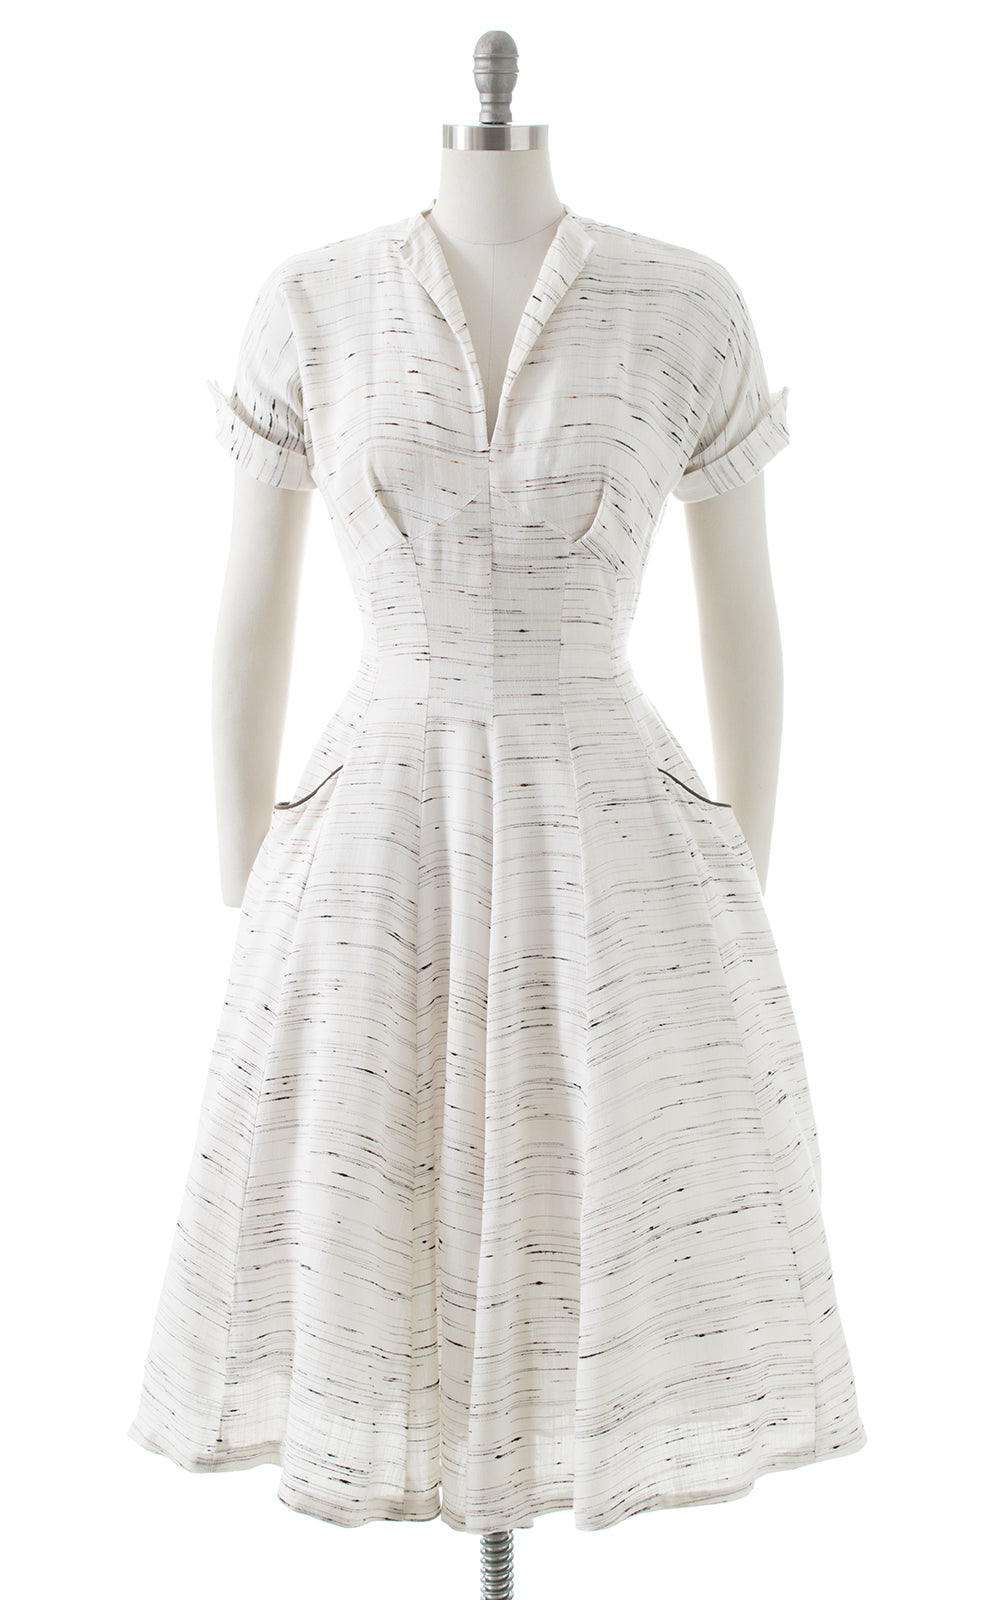 1950s Slubbed Linen Dress with Pockets